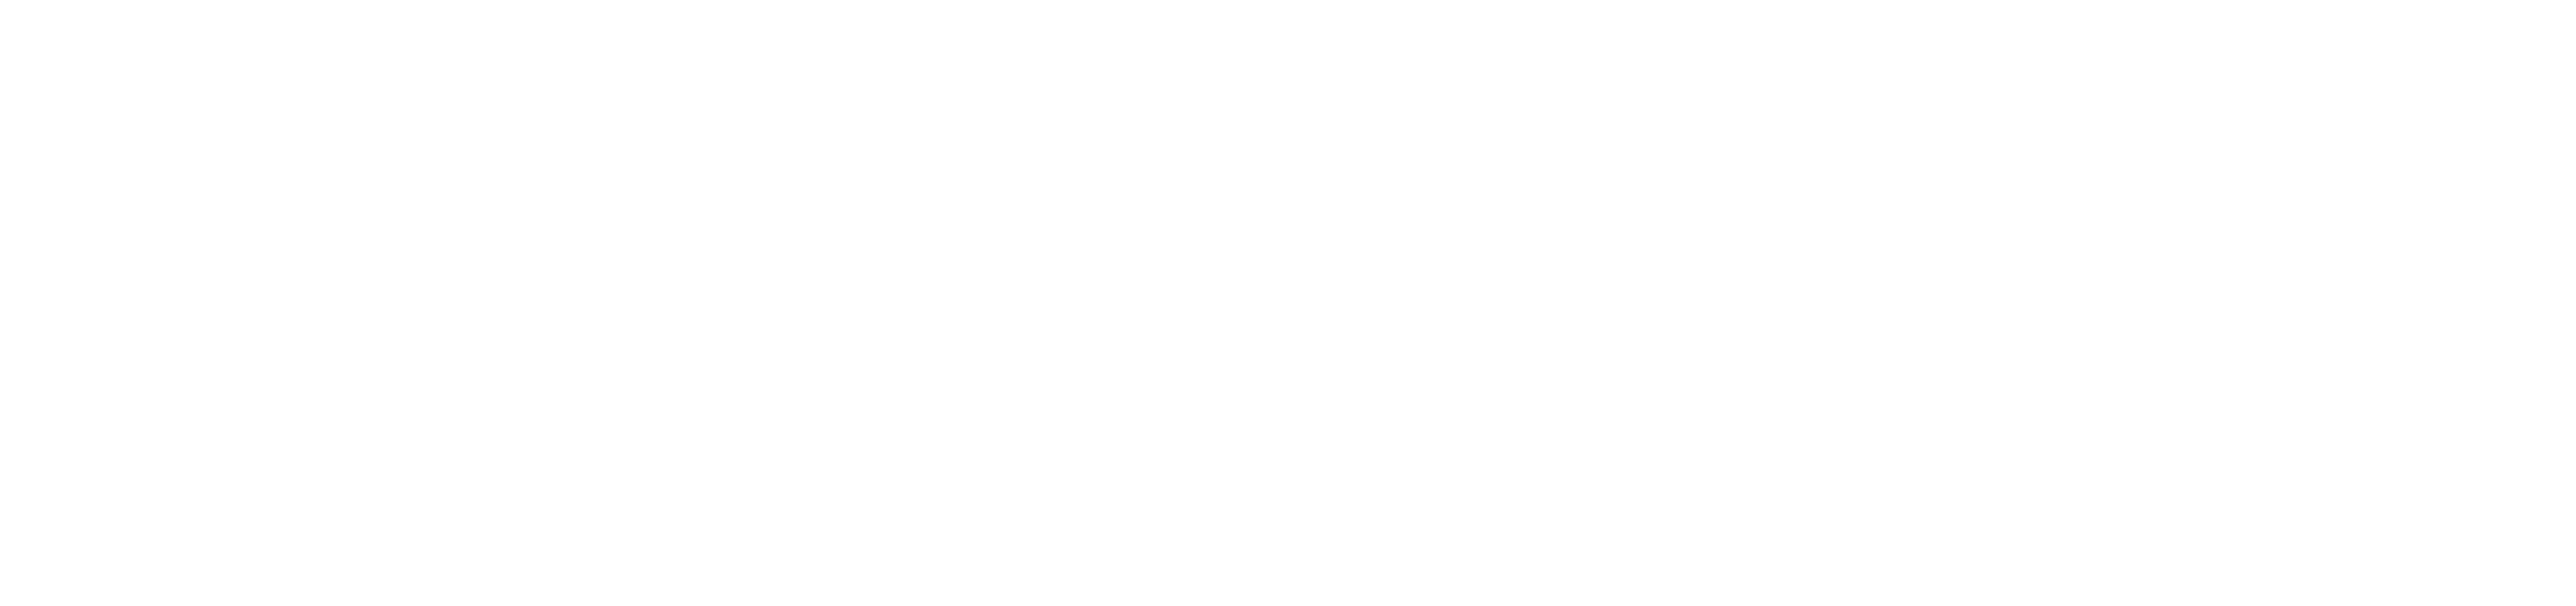 Teesside International Airport Business Park Limited